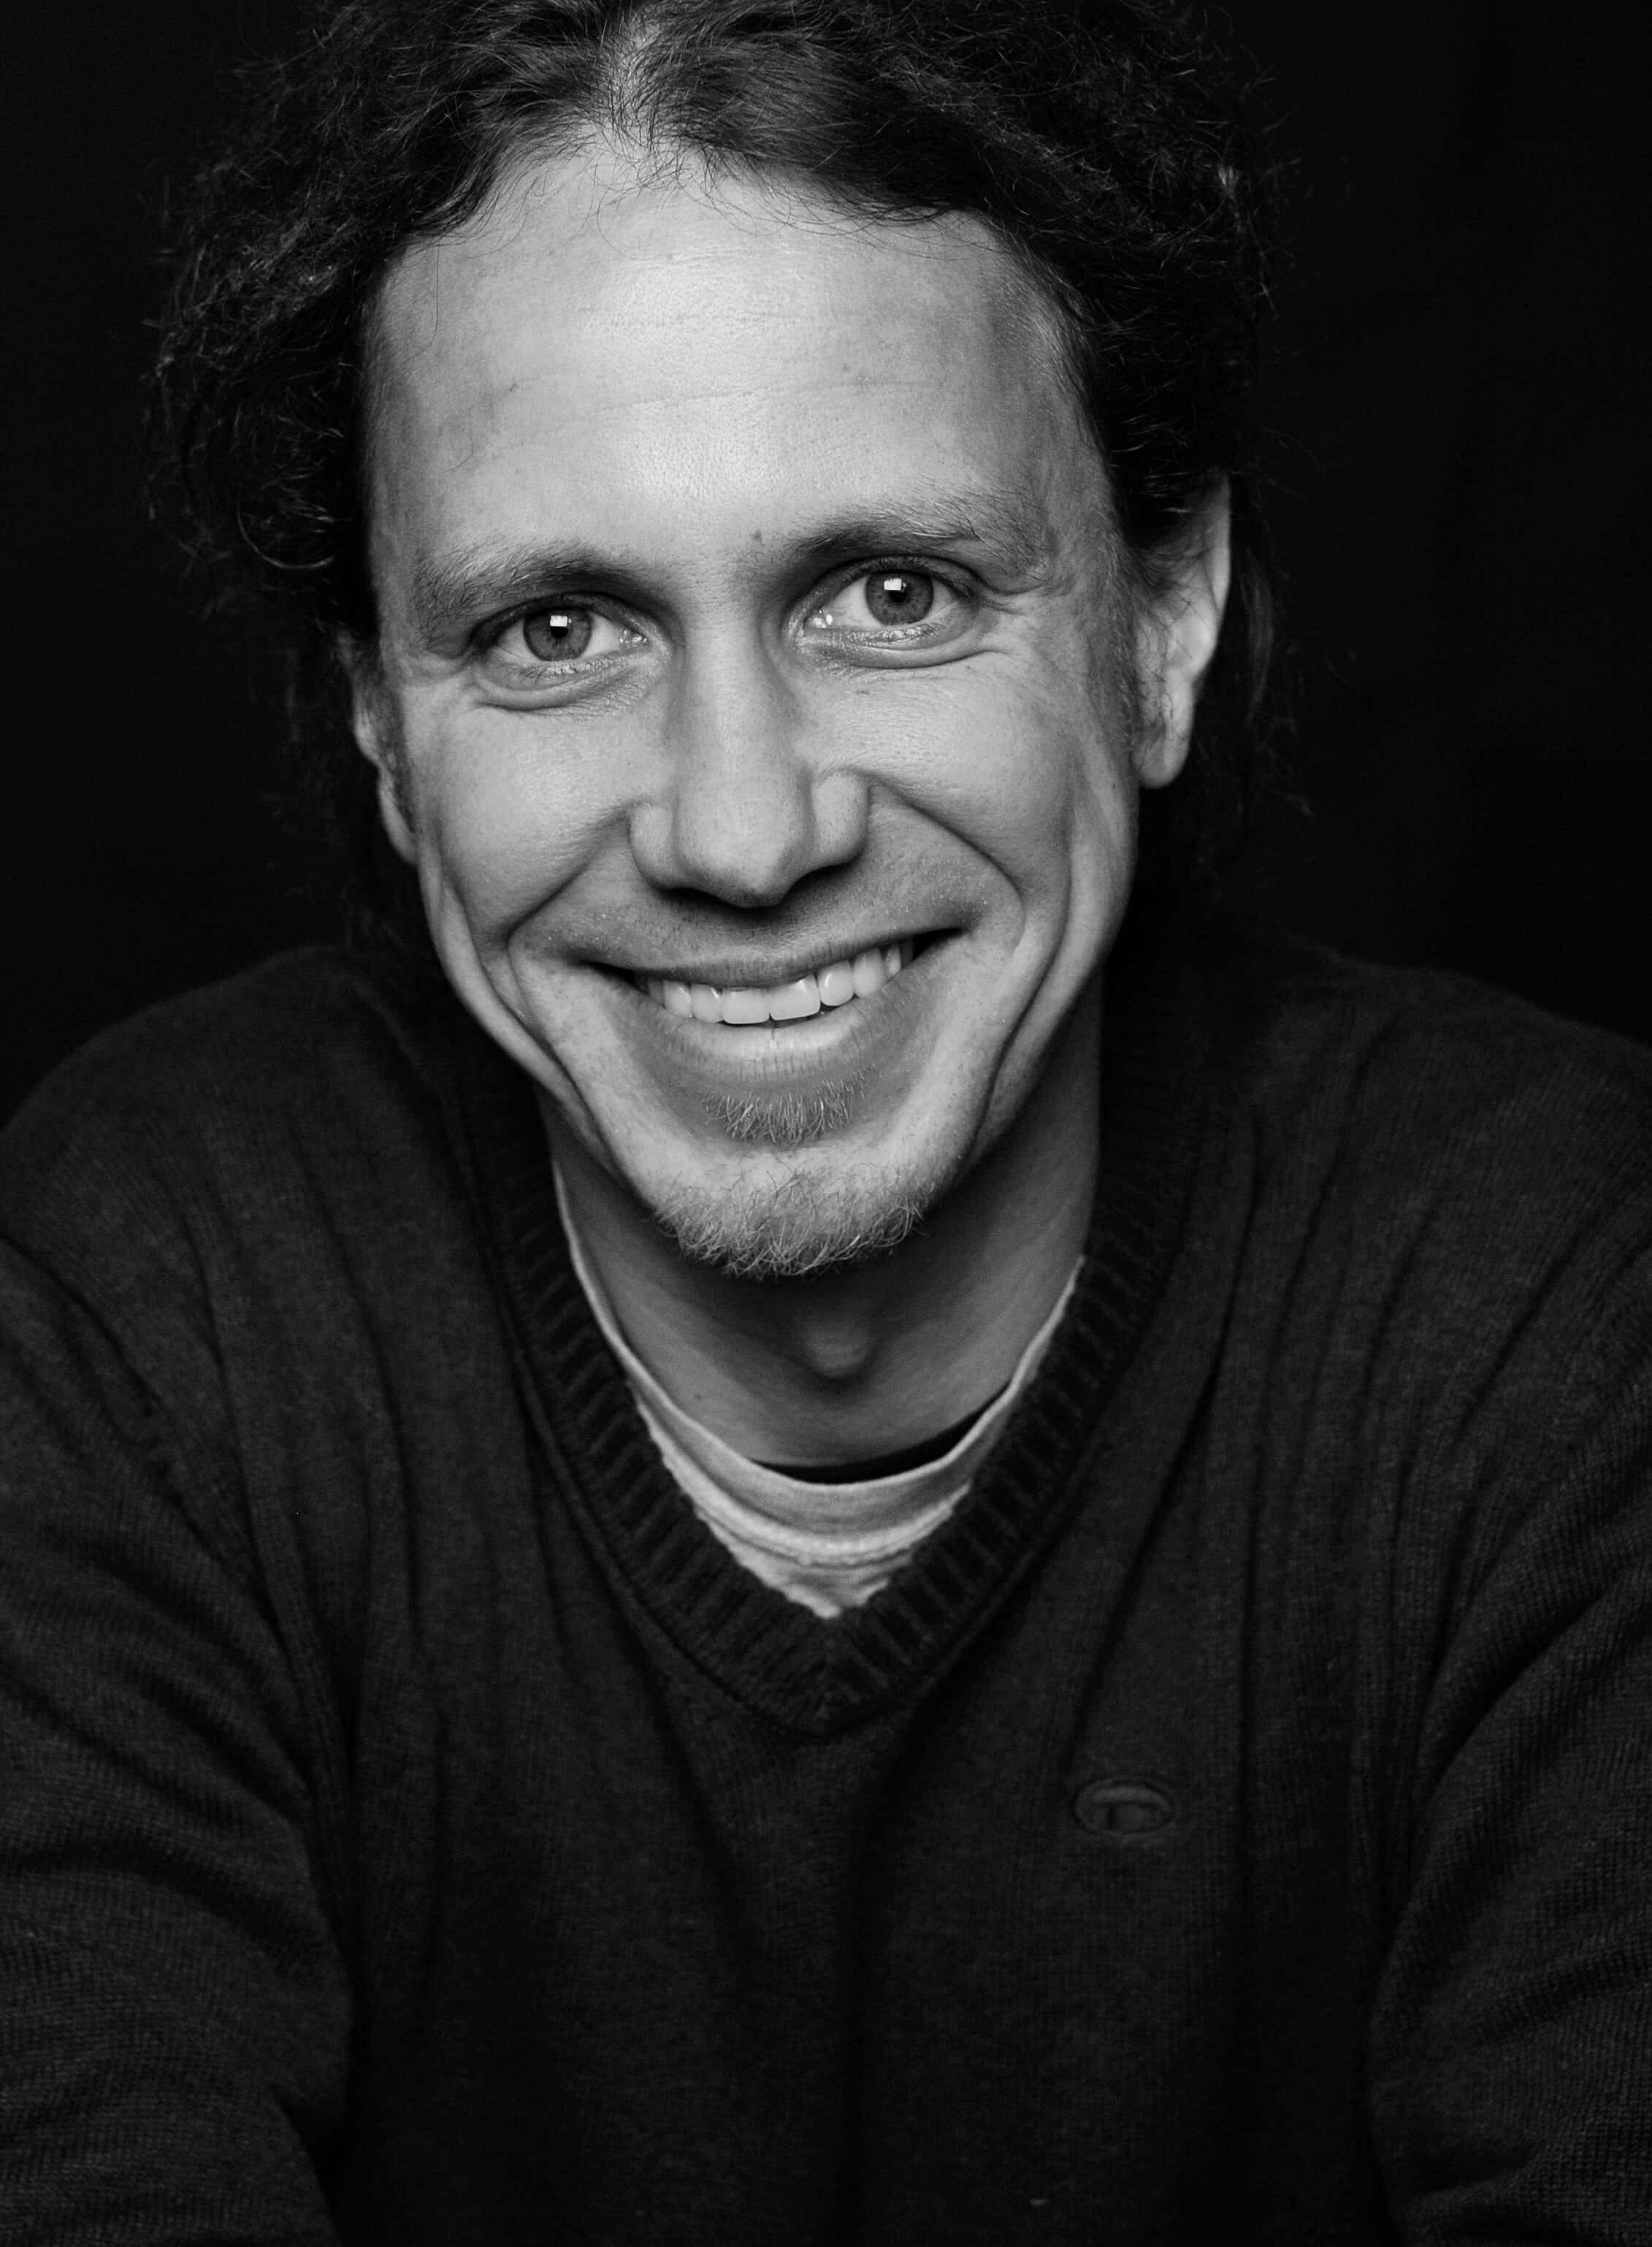 Michael Bauer